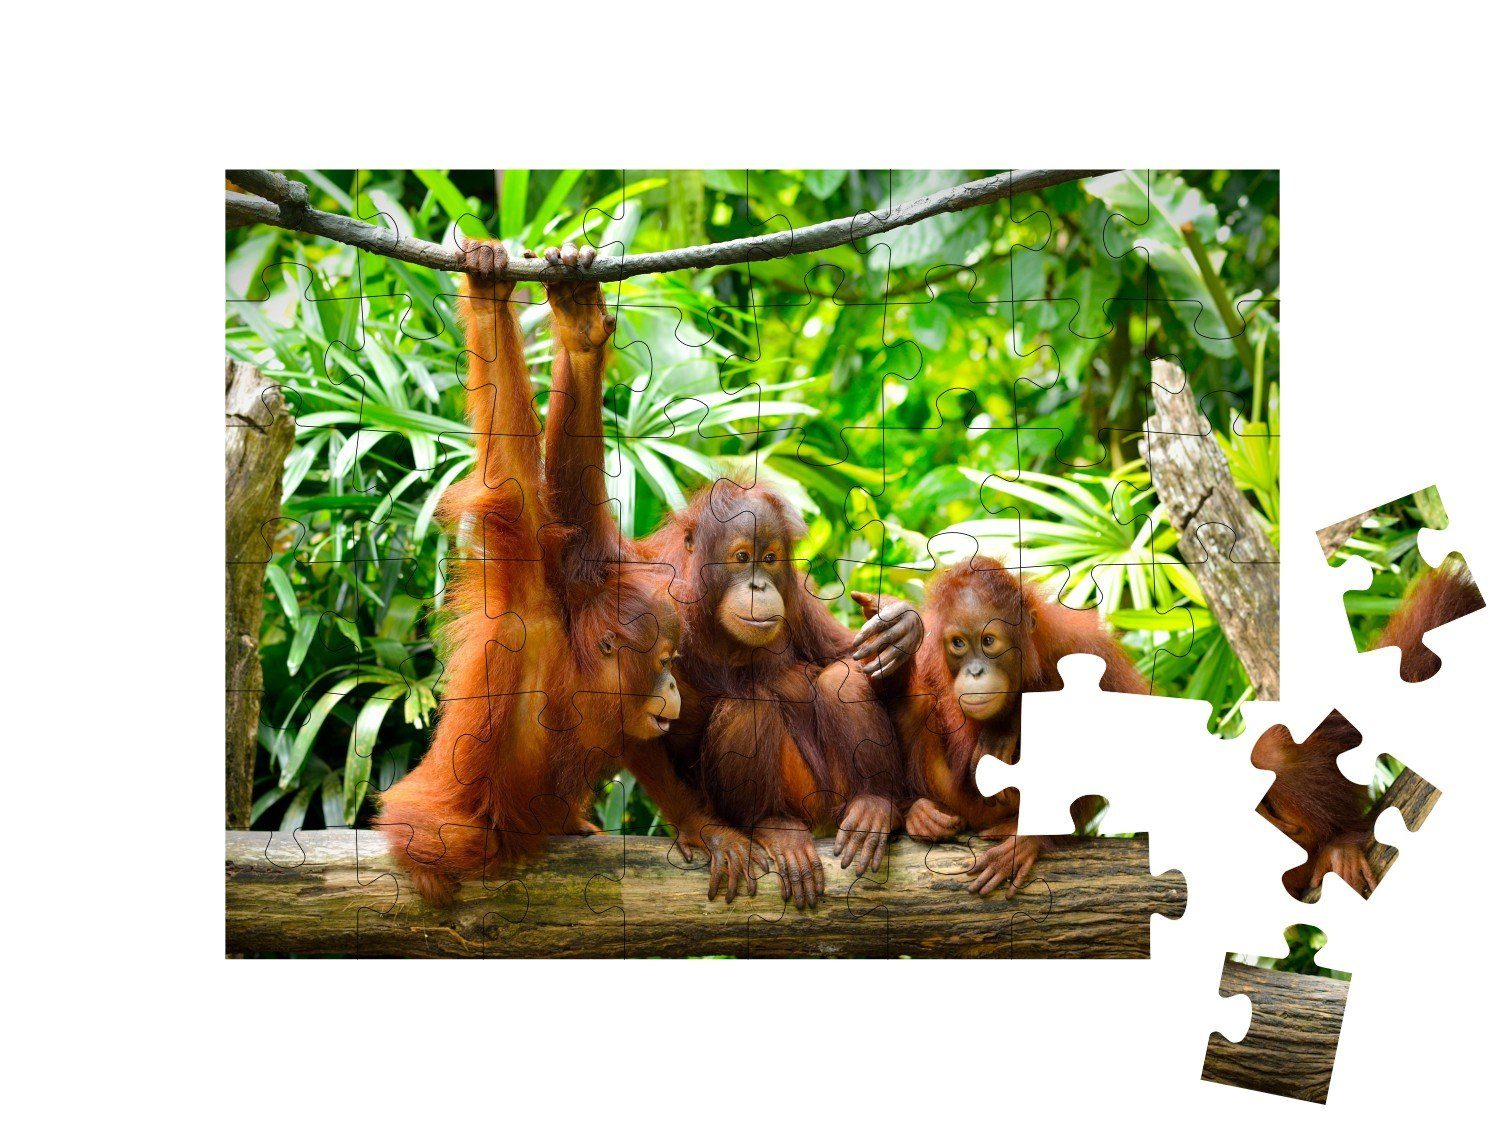 puzzleYOU Puzzle Nahaufnahme von 48 Puzzleteile, Orang-Utans, Tiere puzzleYOU-Kollektionen